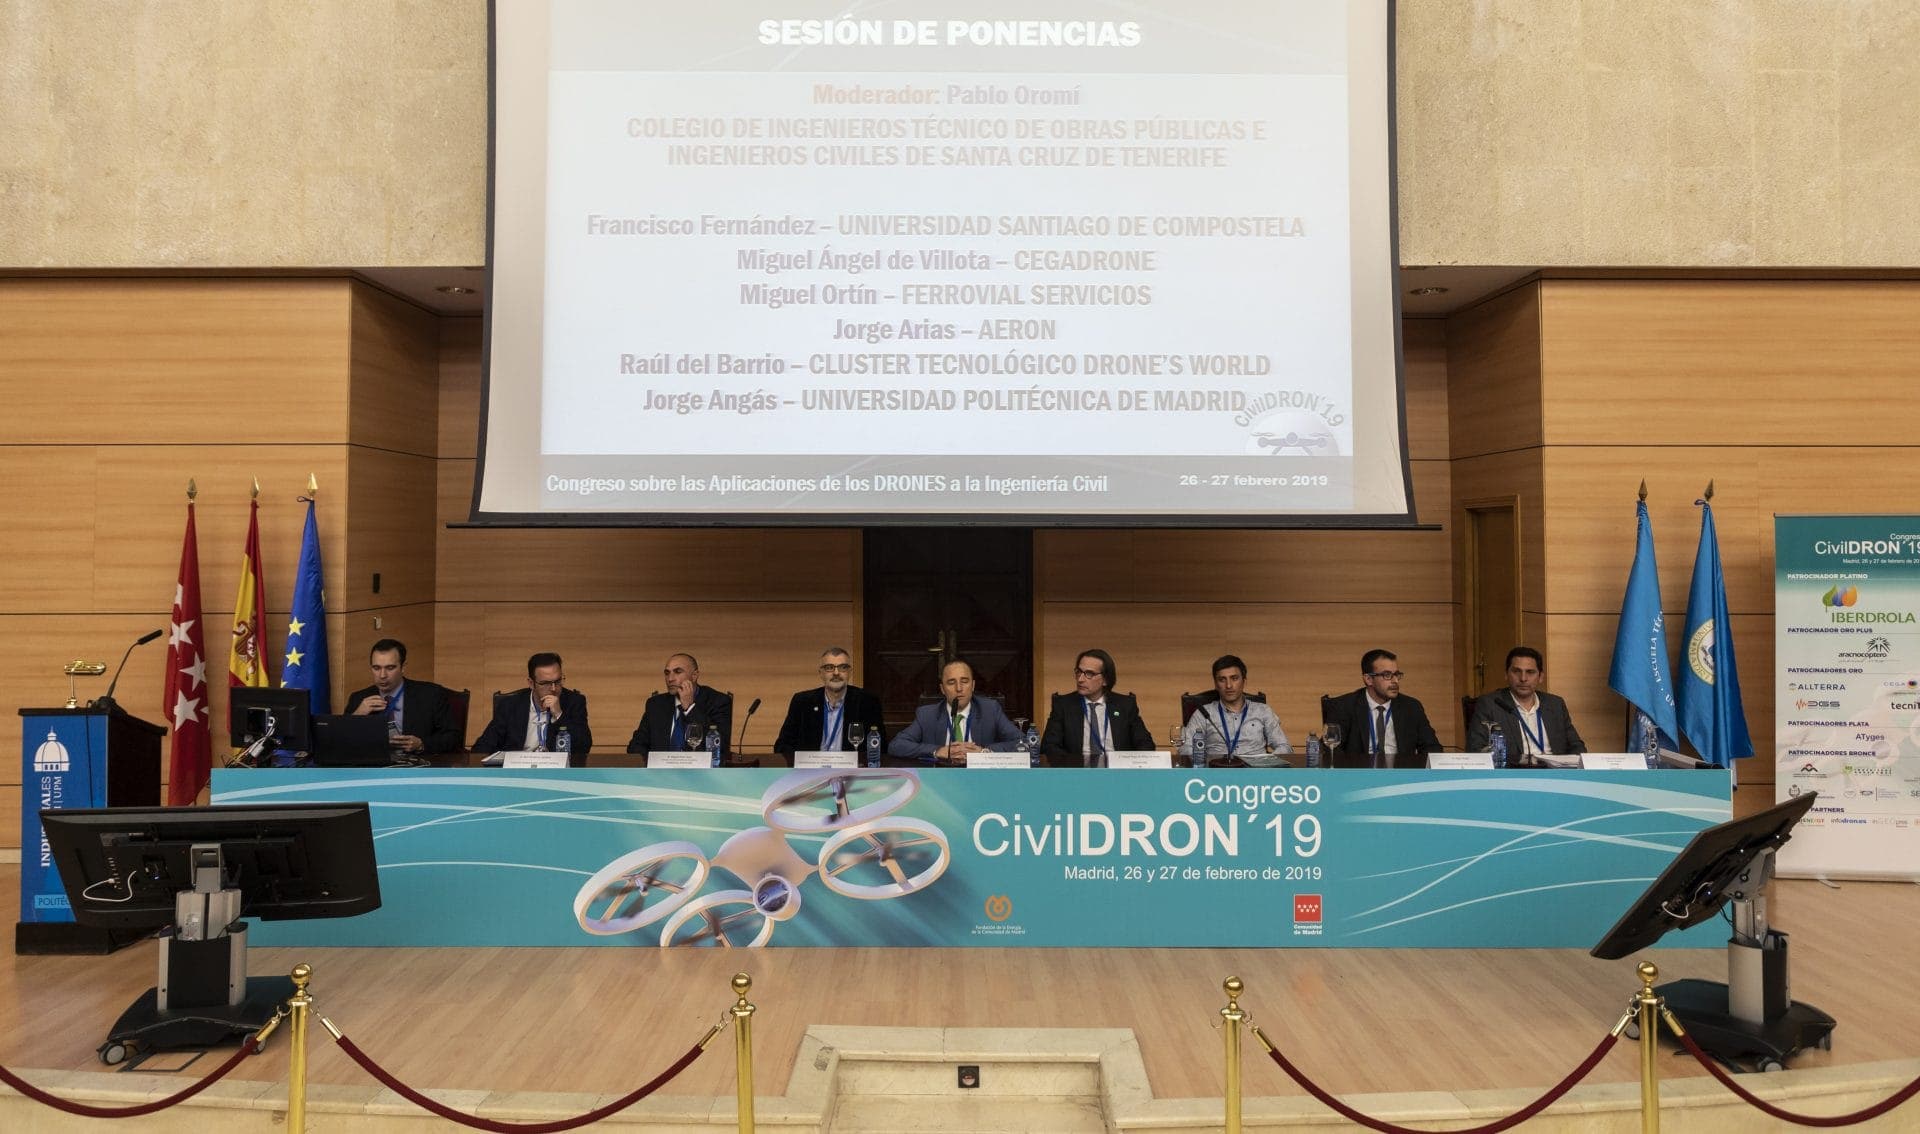 Ferrovial Services participated in CivilDron ‘19, the most prestigious conference on drones in Spain